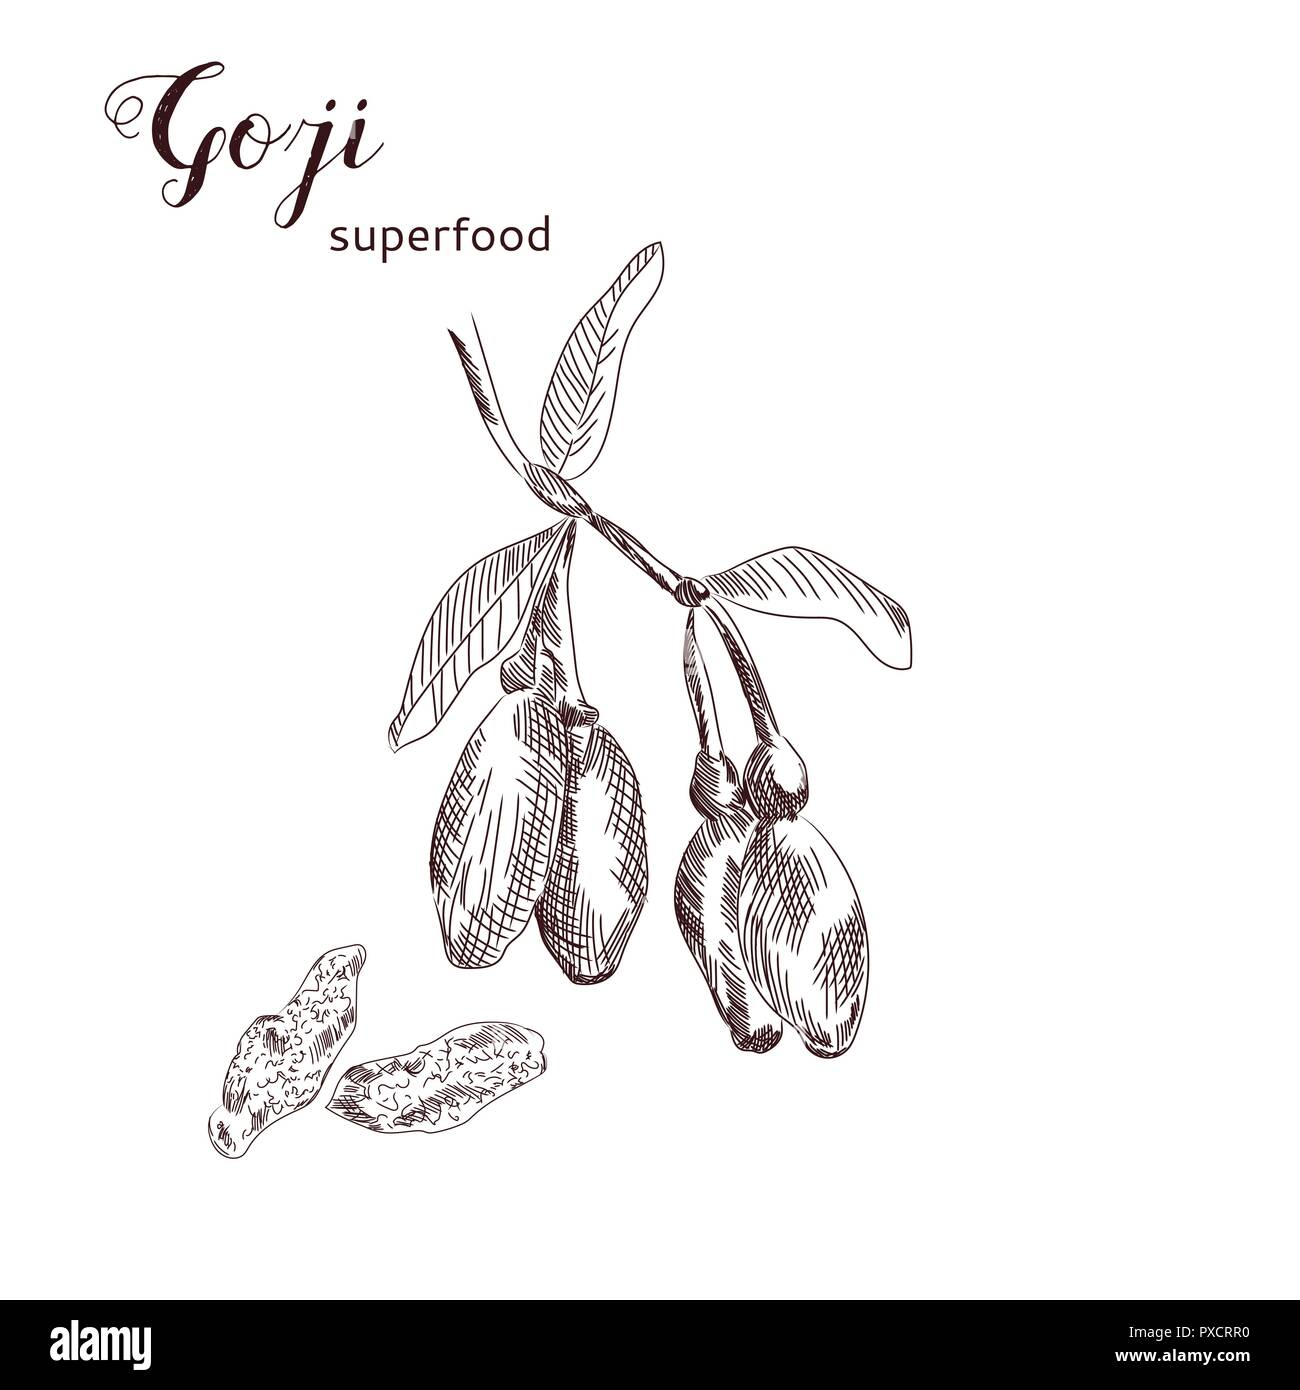 Goji berries hand drawn illustration. Goji plant branch with berries hanging on it. Dried superfood goji berries vector. Stock Vector